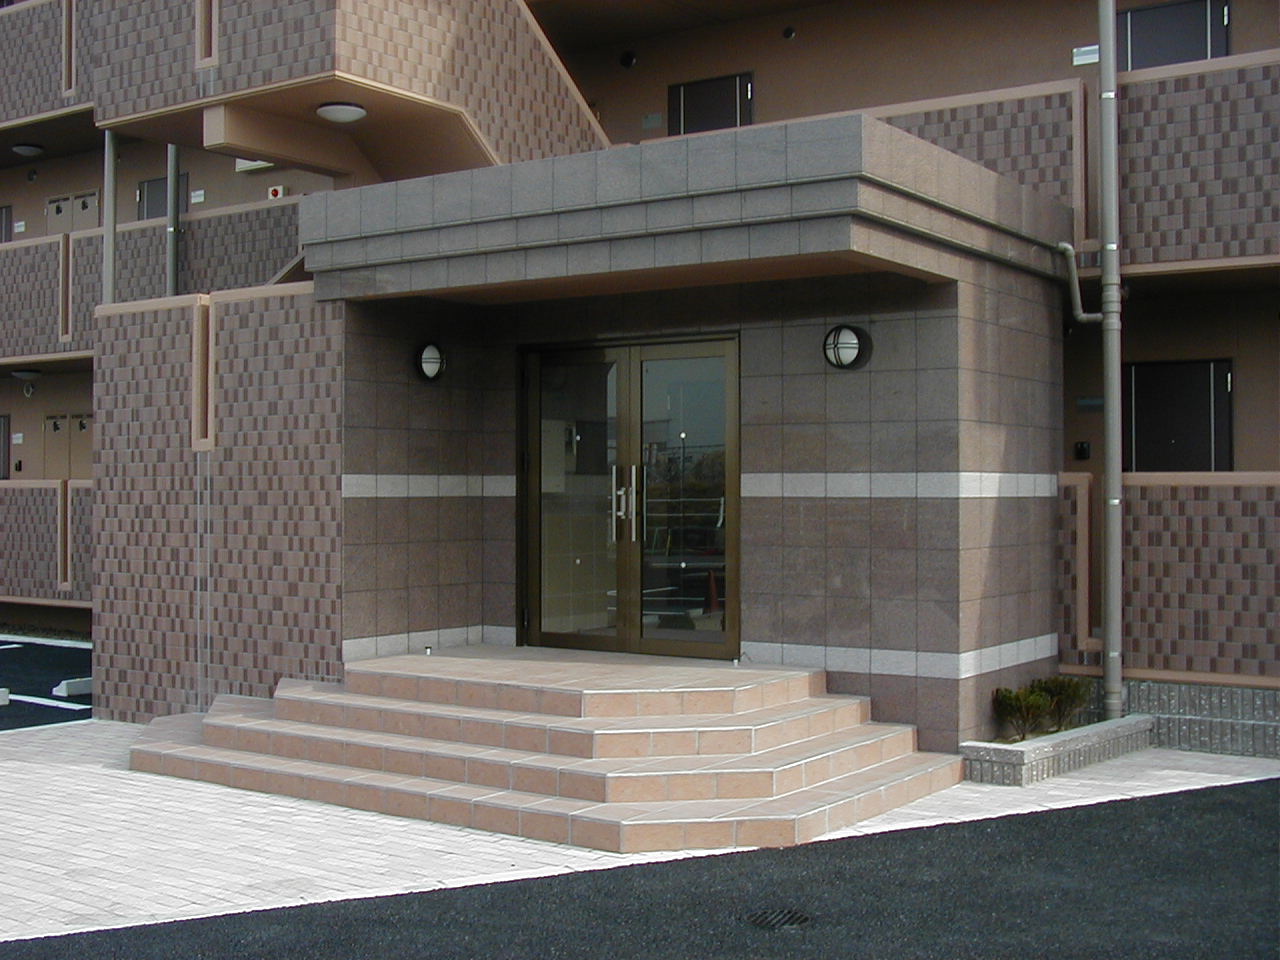 Entrance. Entrance of appearance tiled